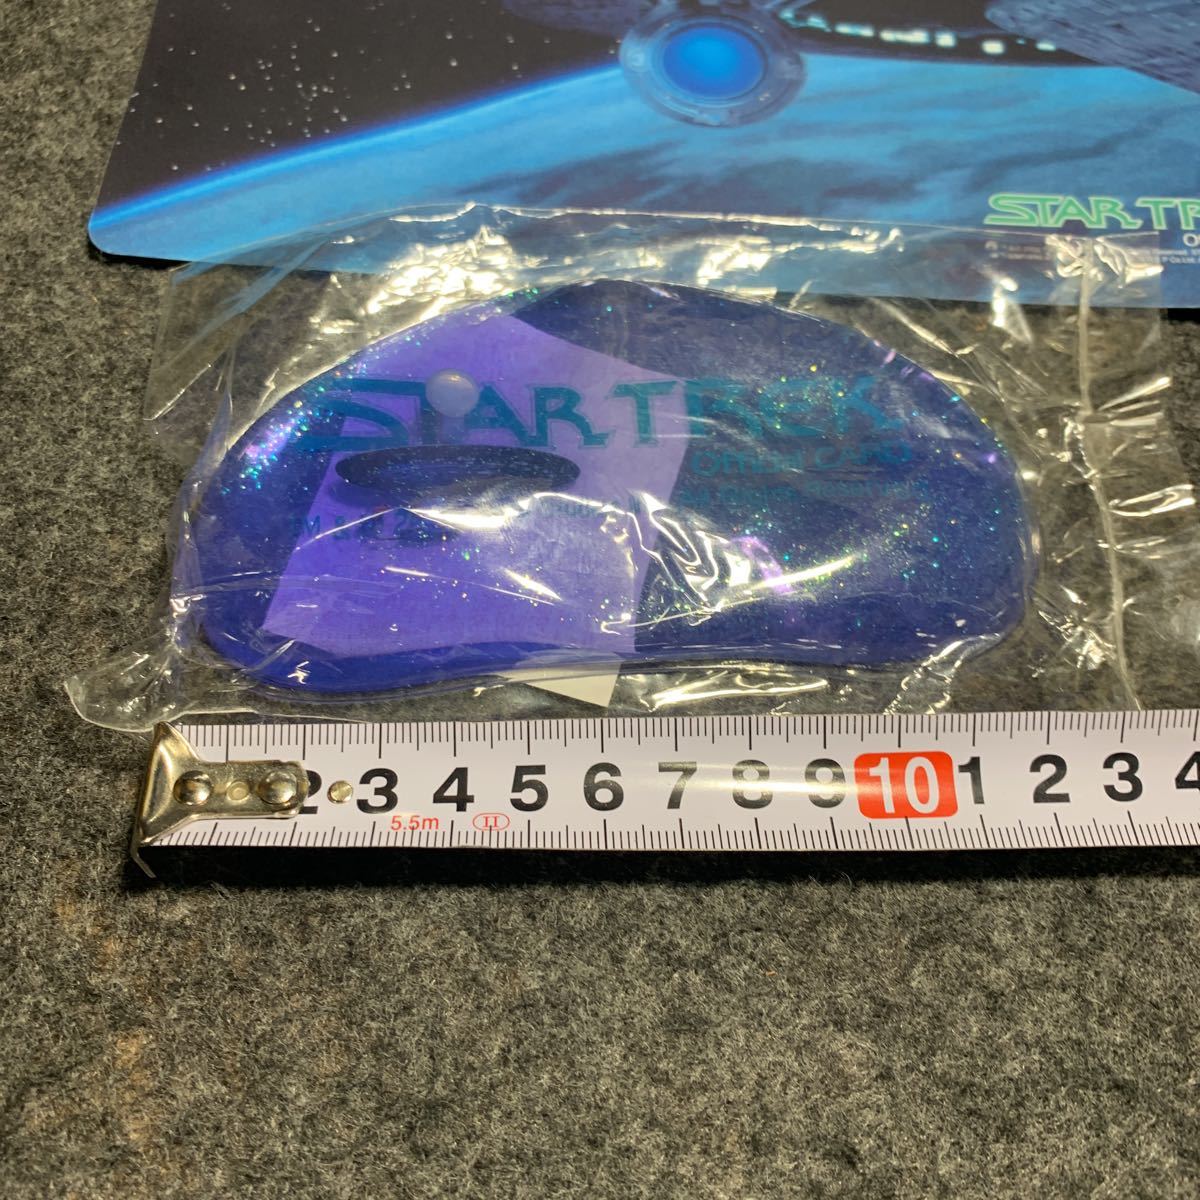 R0273 STAR TREK Star Trek mouse pad list rest set Offcial CARD